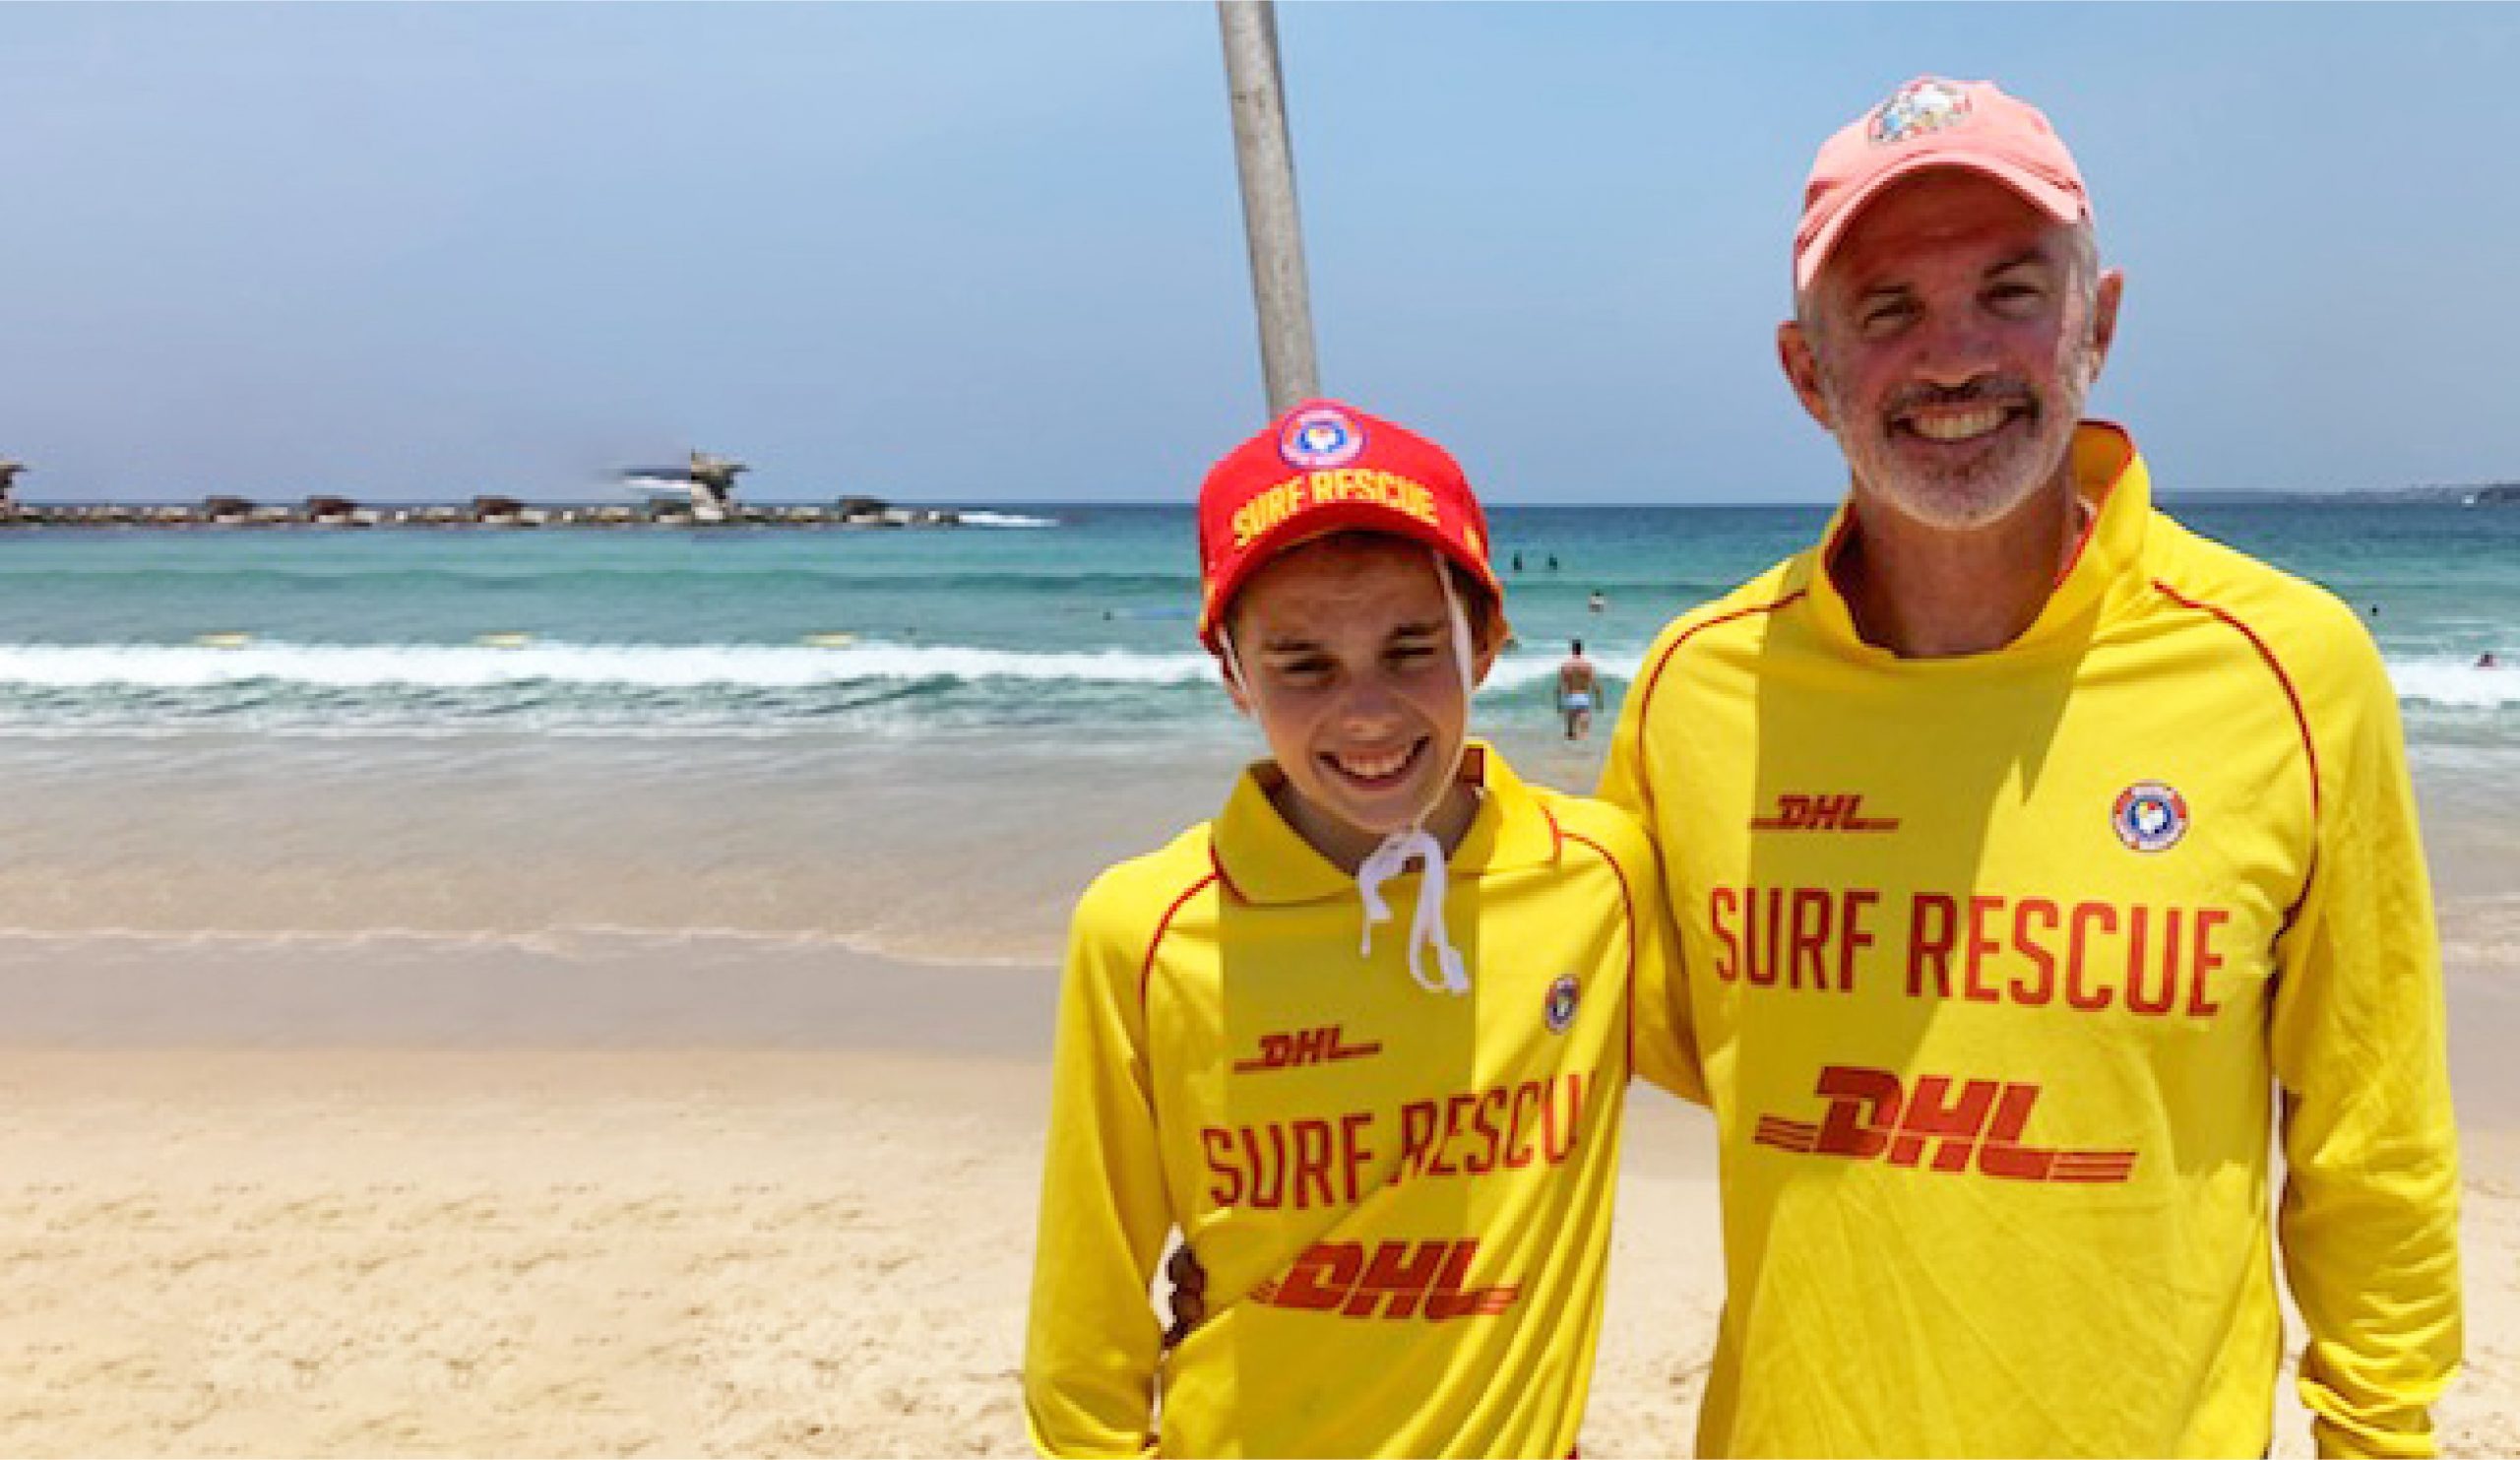 Volunteer surf lifesavers Joe Porteus and his son, Campbell on patrol at North Bondi Beach.